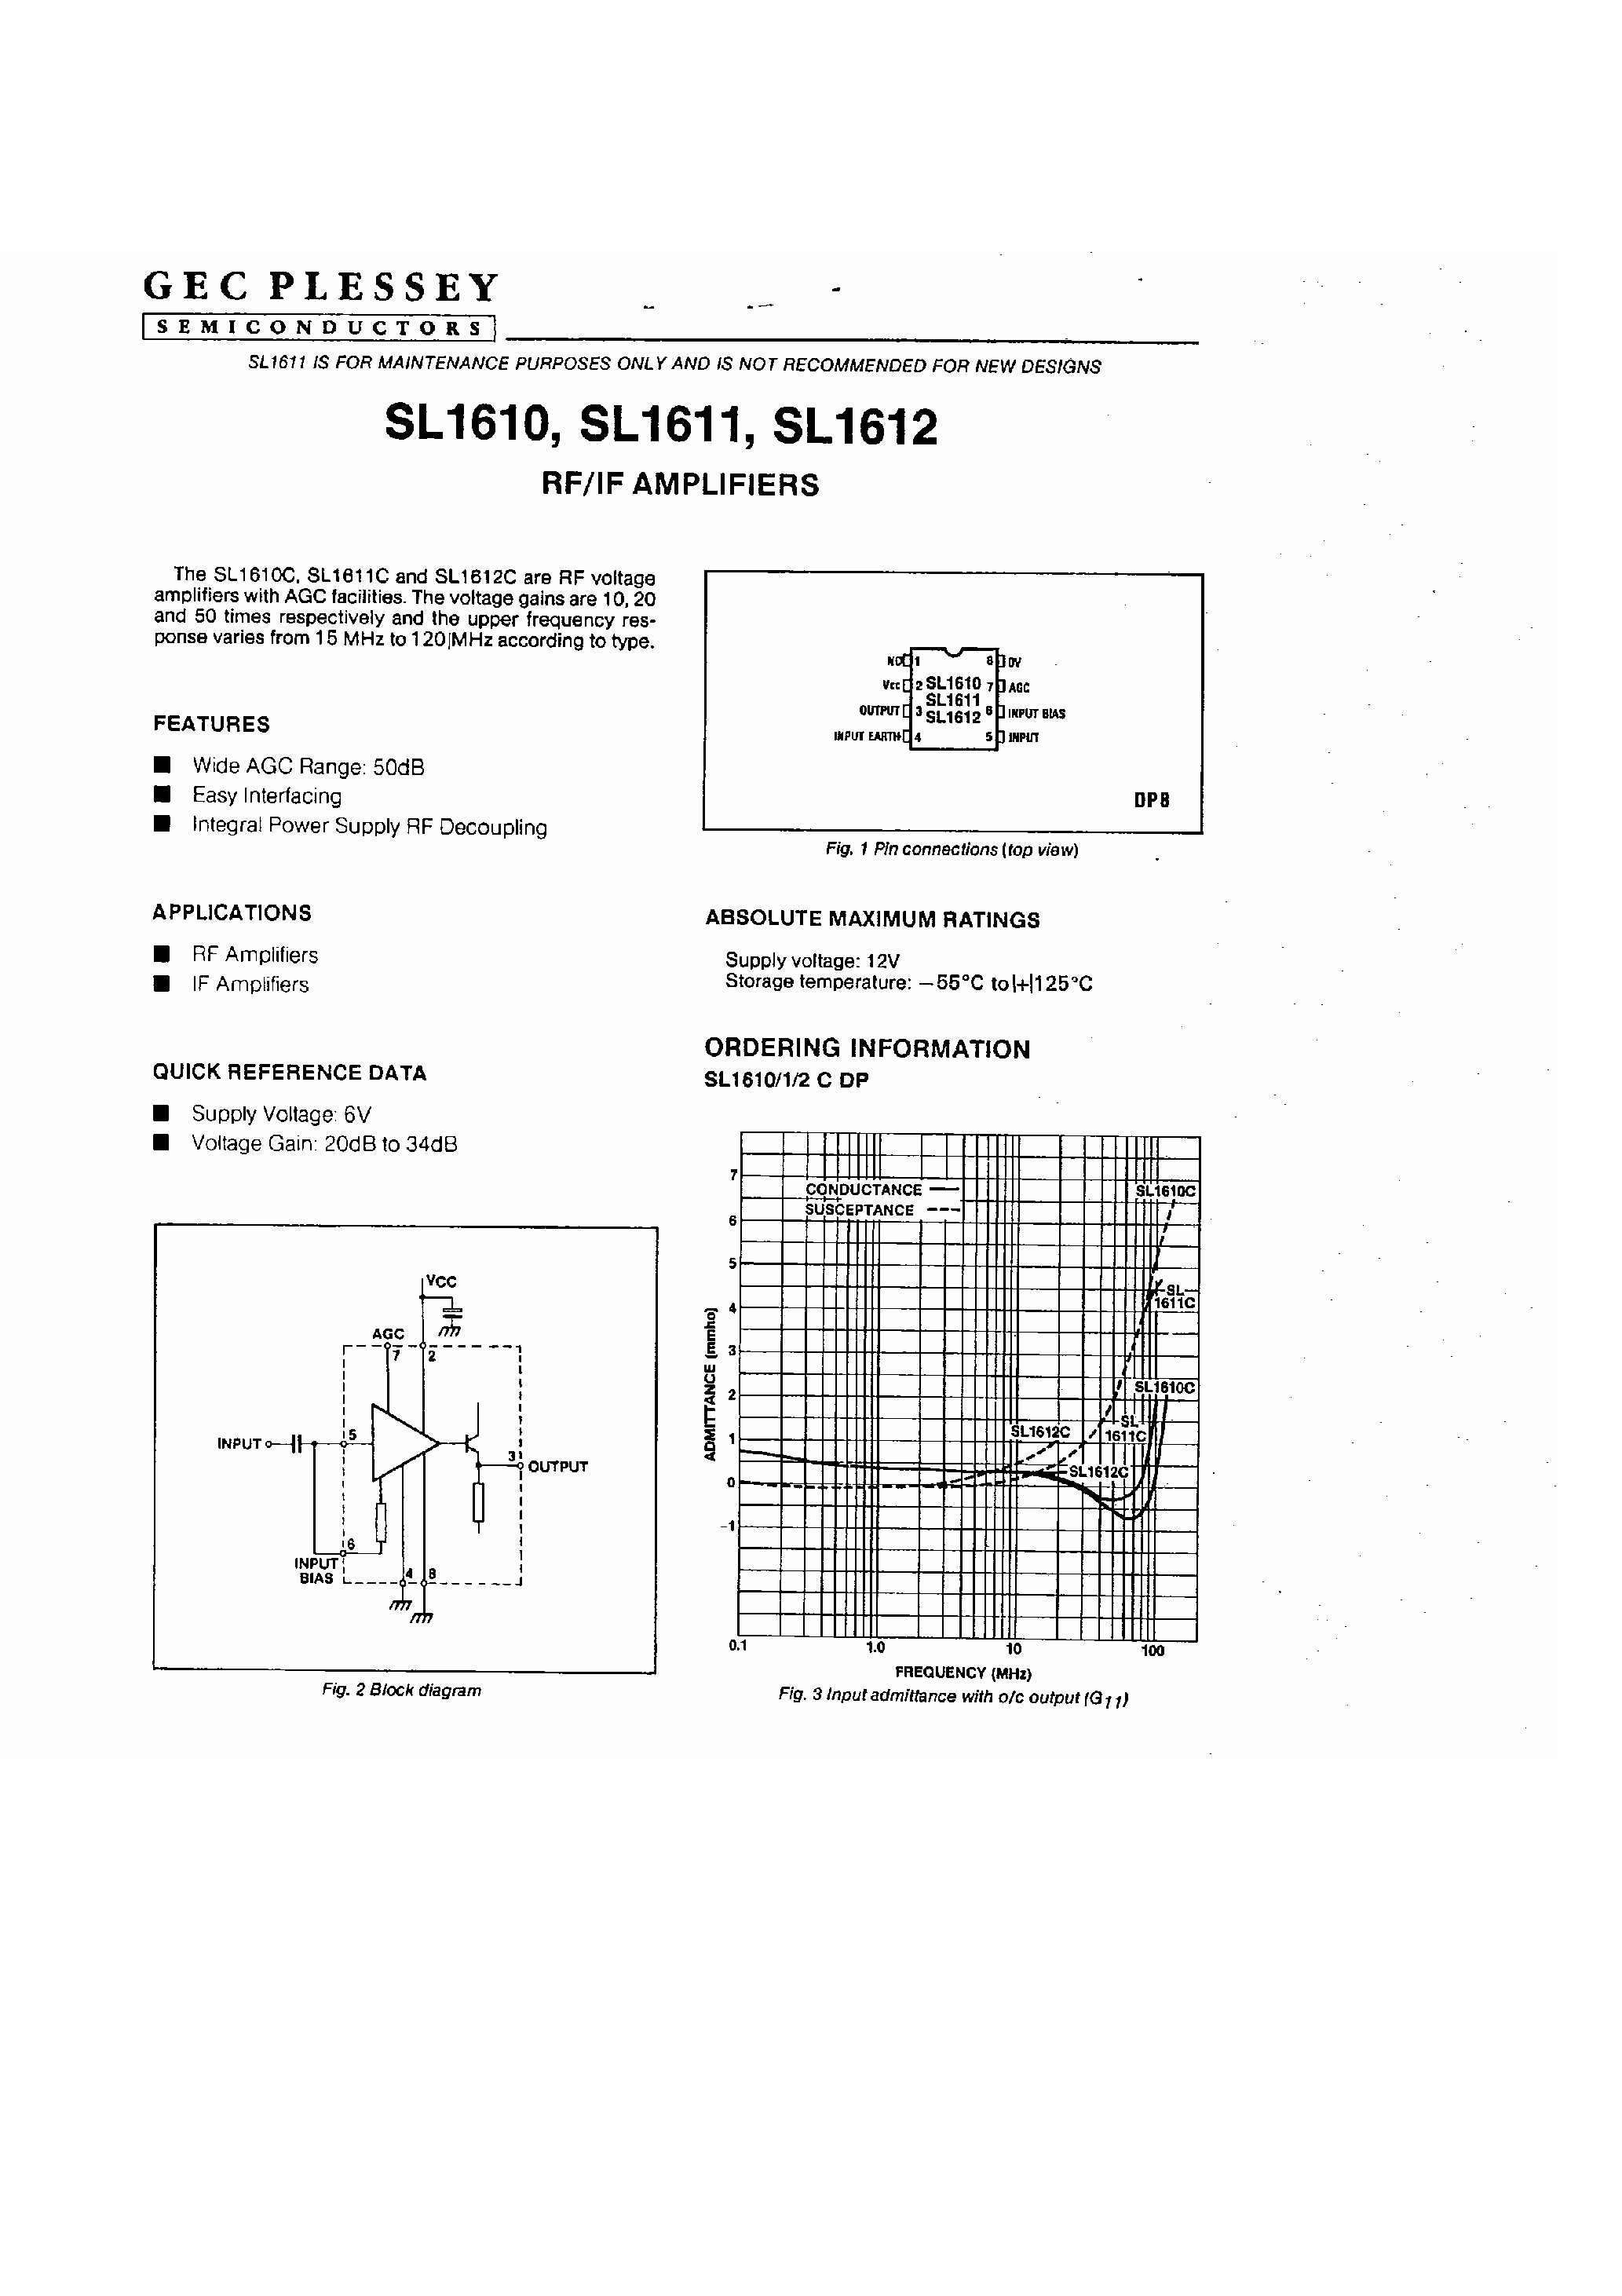 Datasheet SL1612 - (SL1611/SL1611) RF / IF Amplifiers page 1